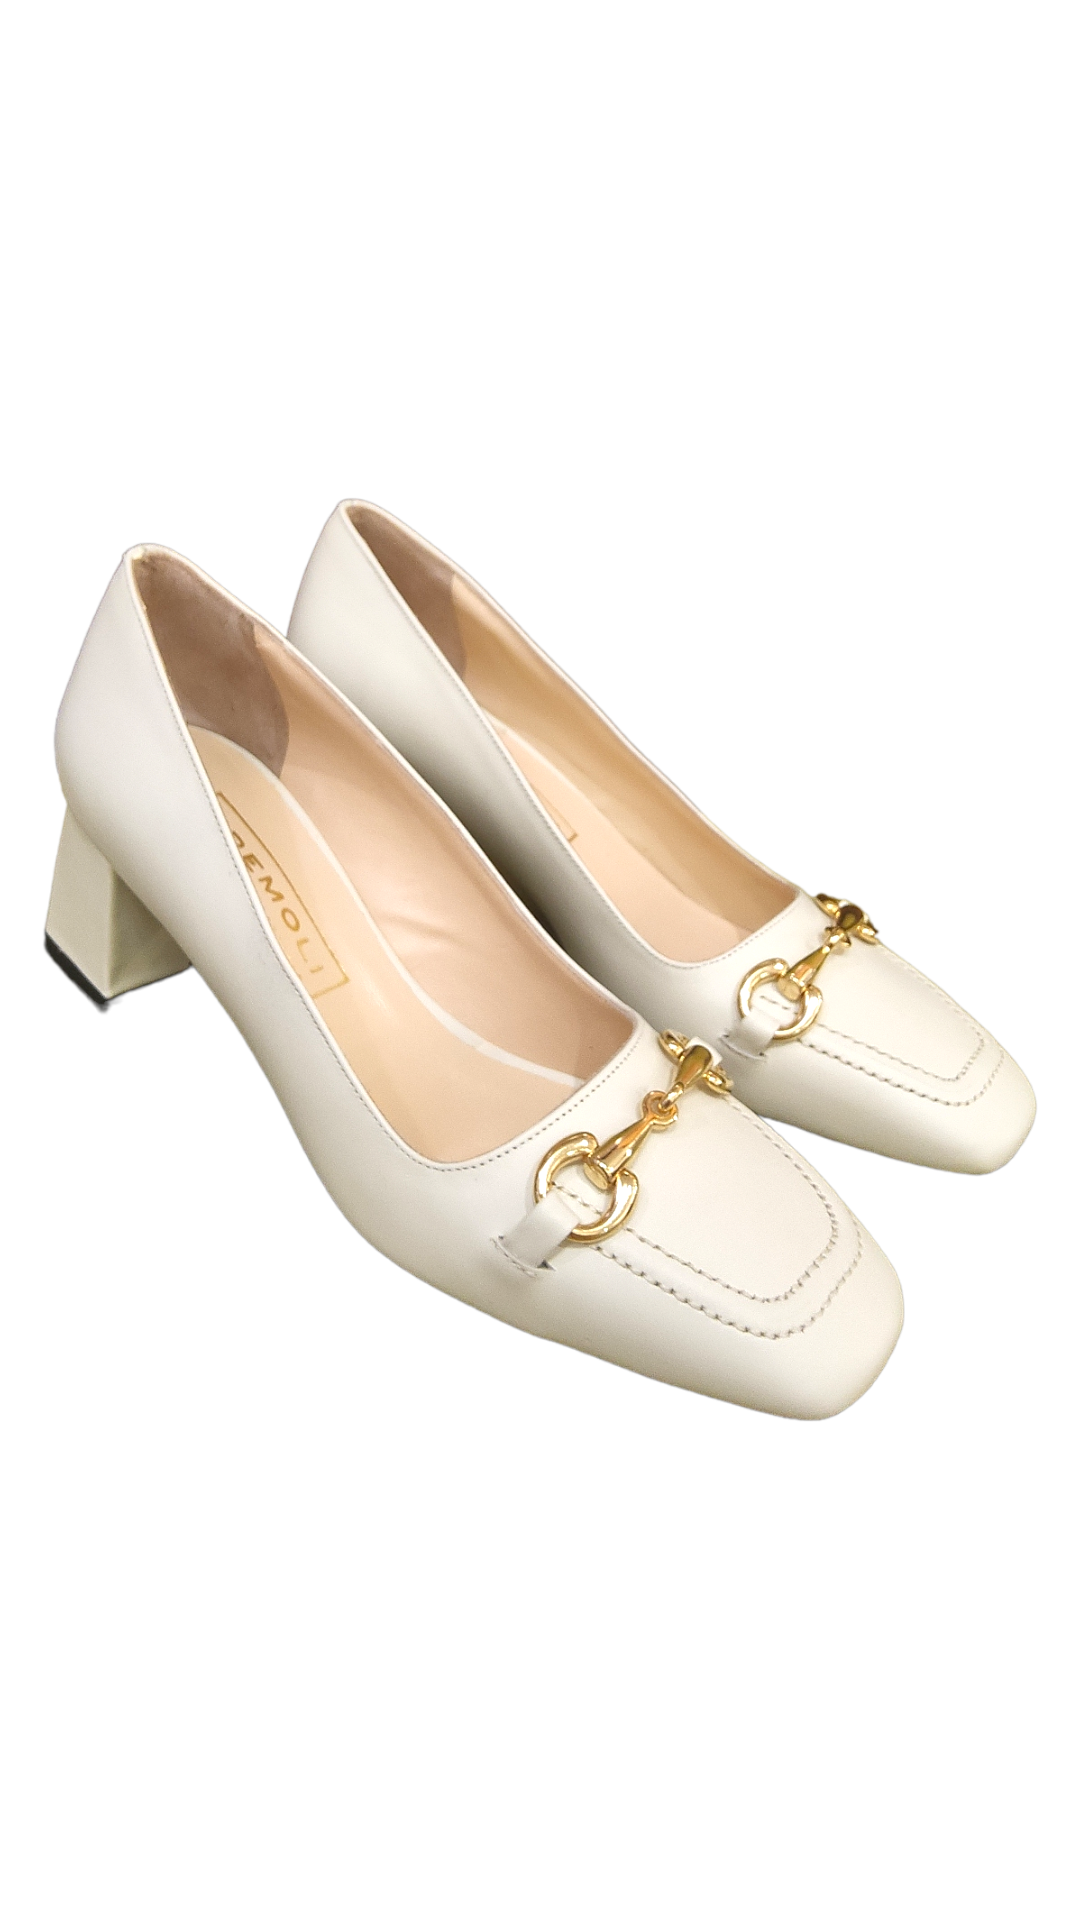 Cream leather court shoe